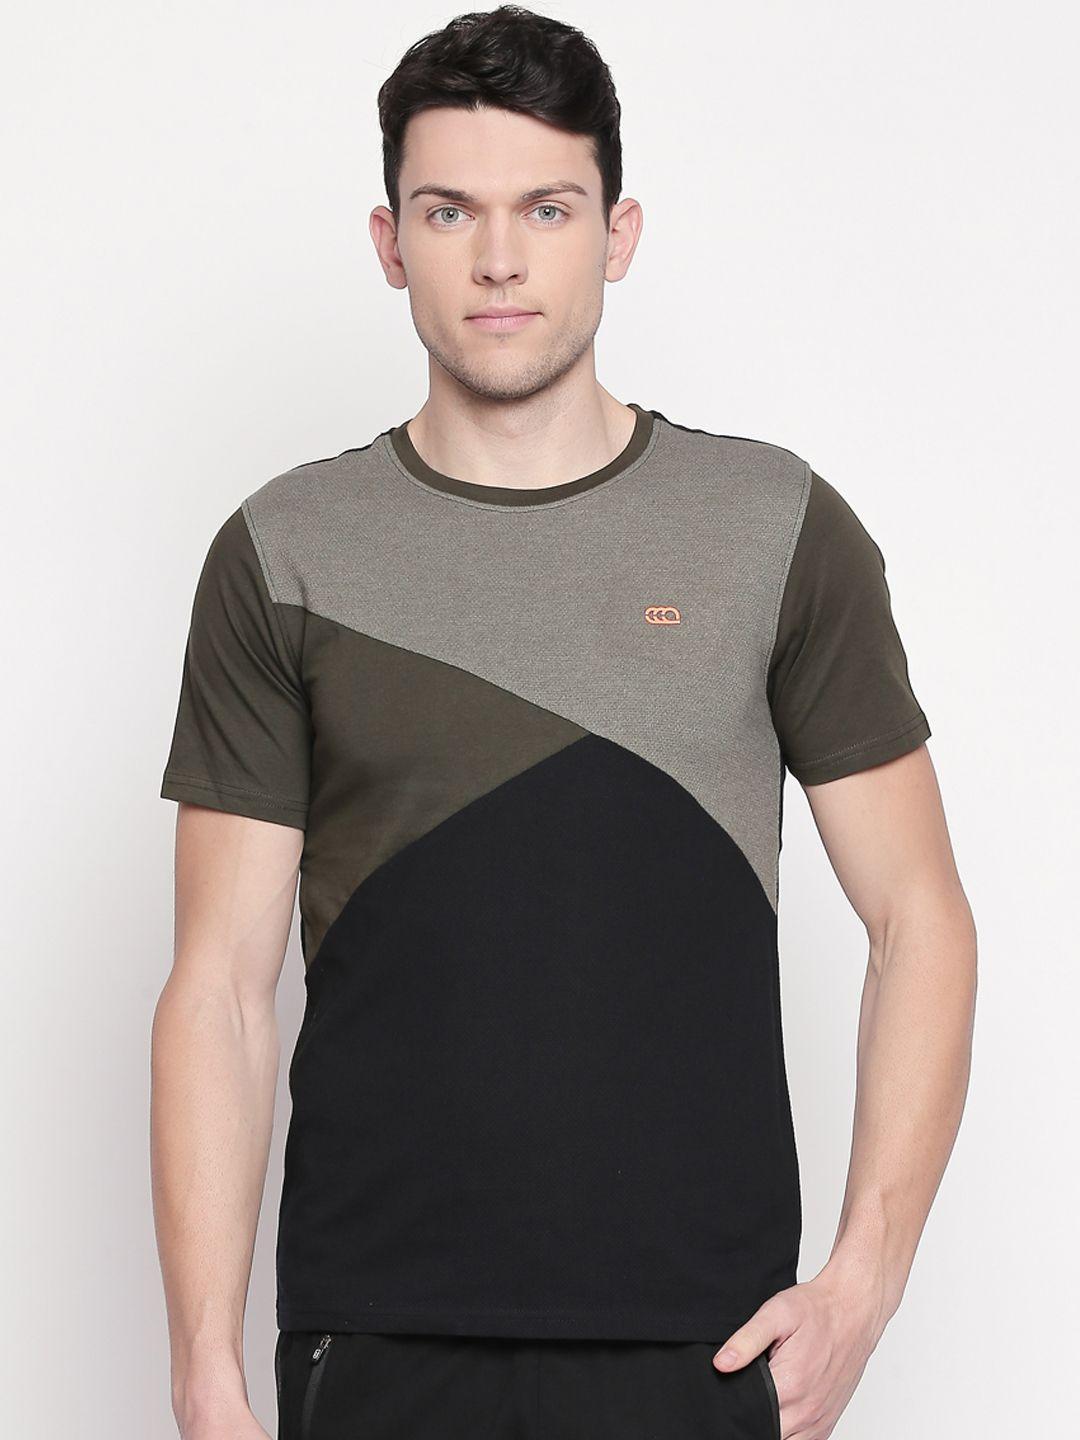 ajile by pantaloons men black & olive colourblocked round neck t-shirt